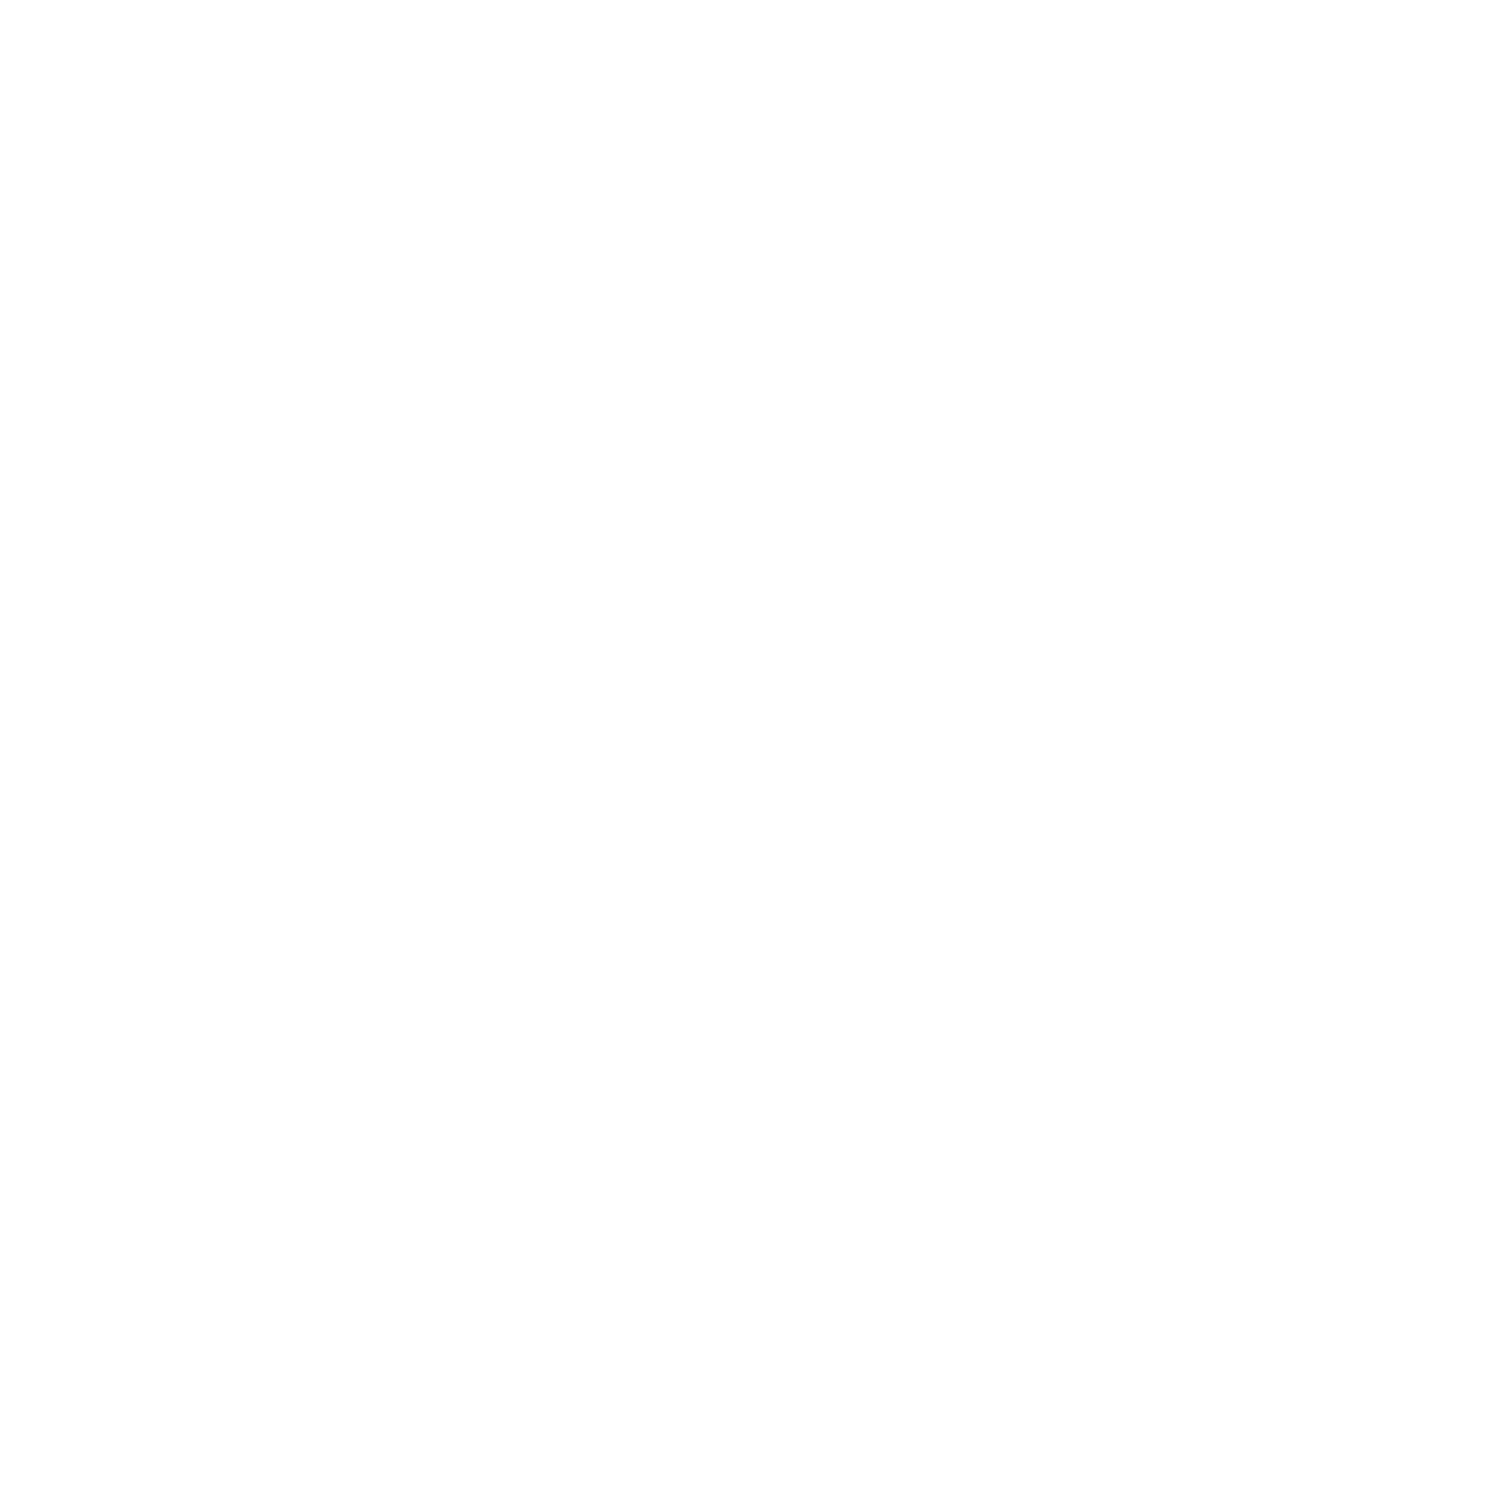 atc management 2.png